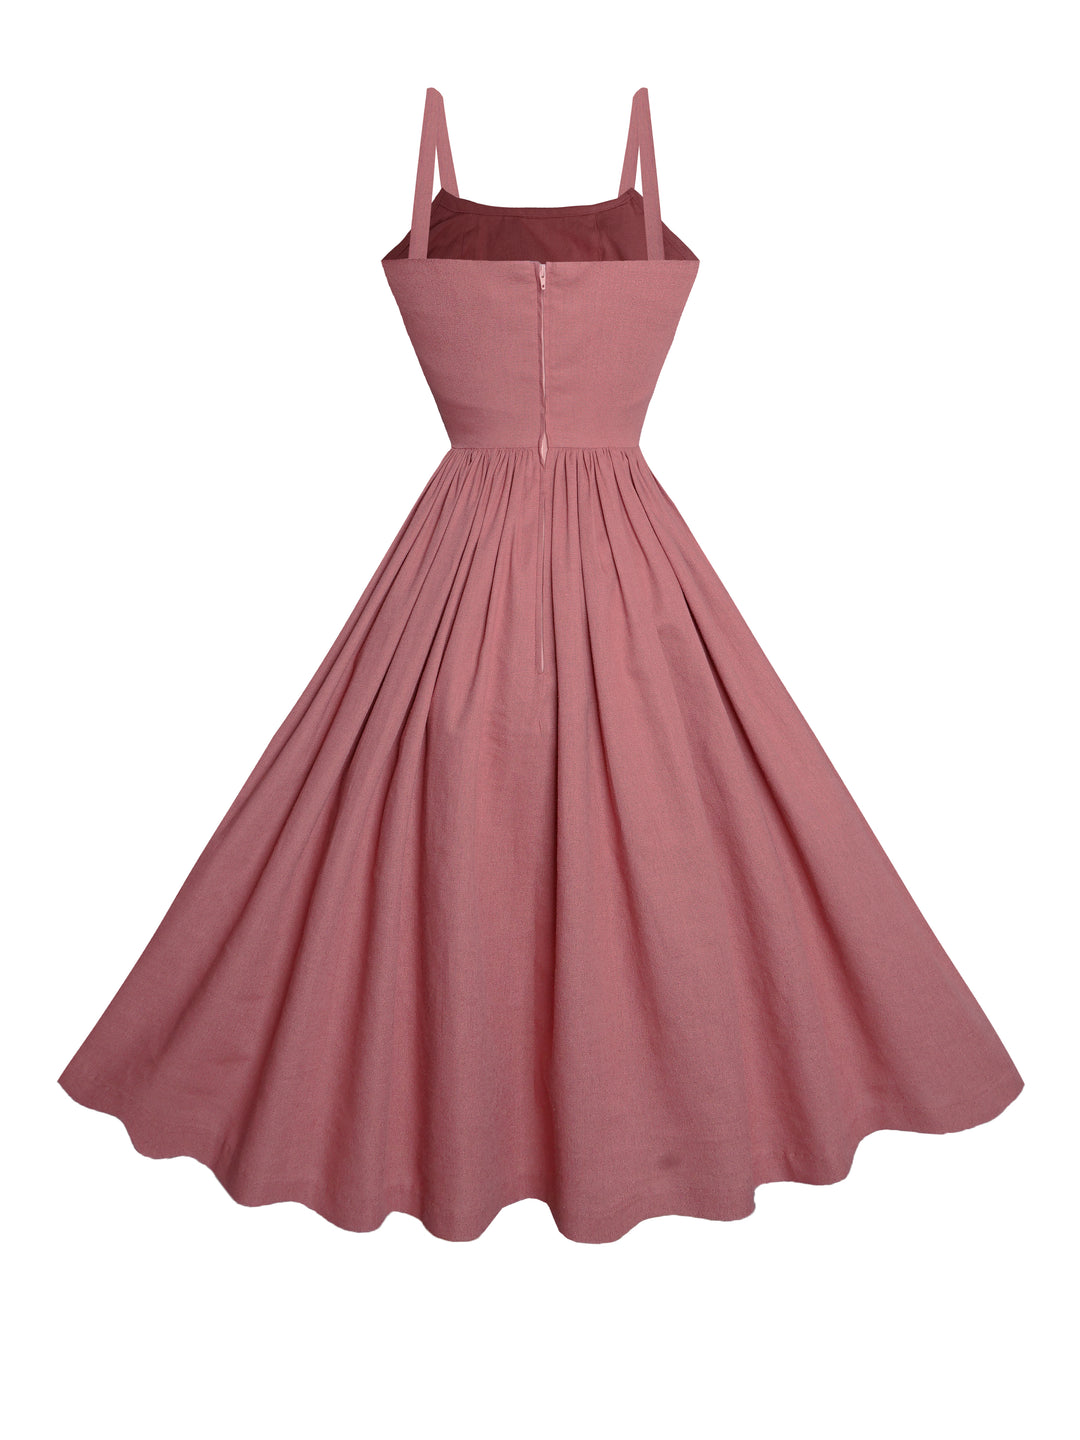 MTO - Grace Dress in Antique Rose Linen